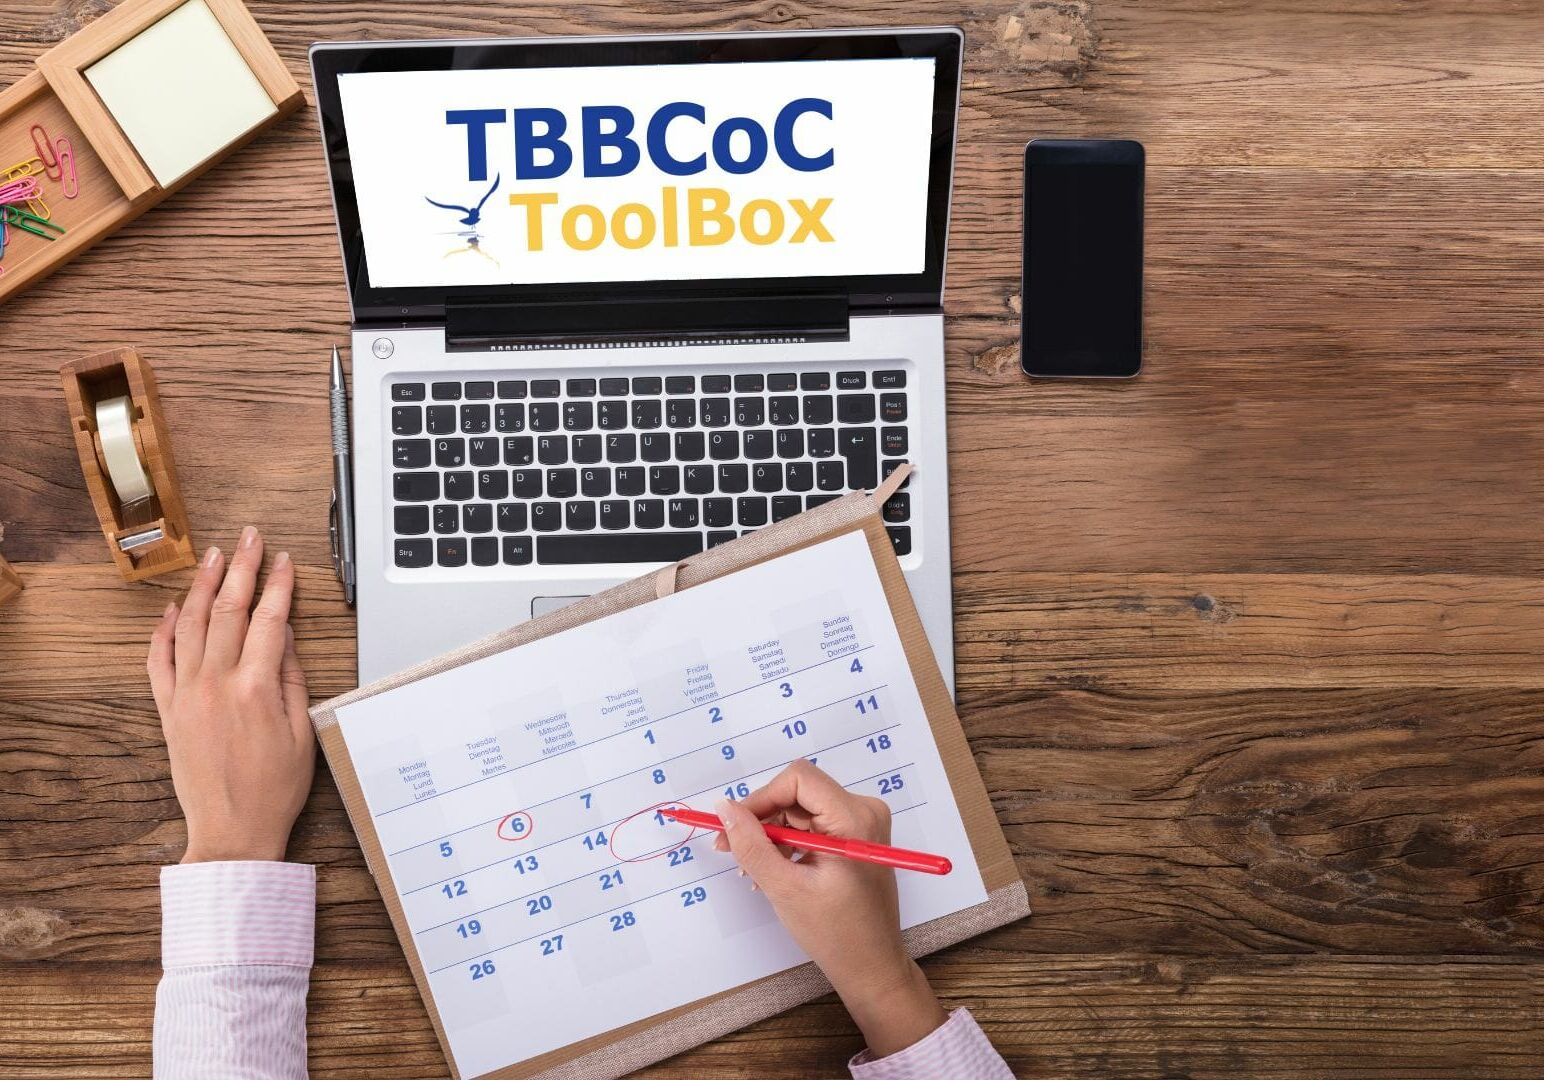 TBBCoC ToolBox Events